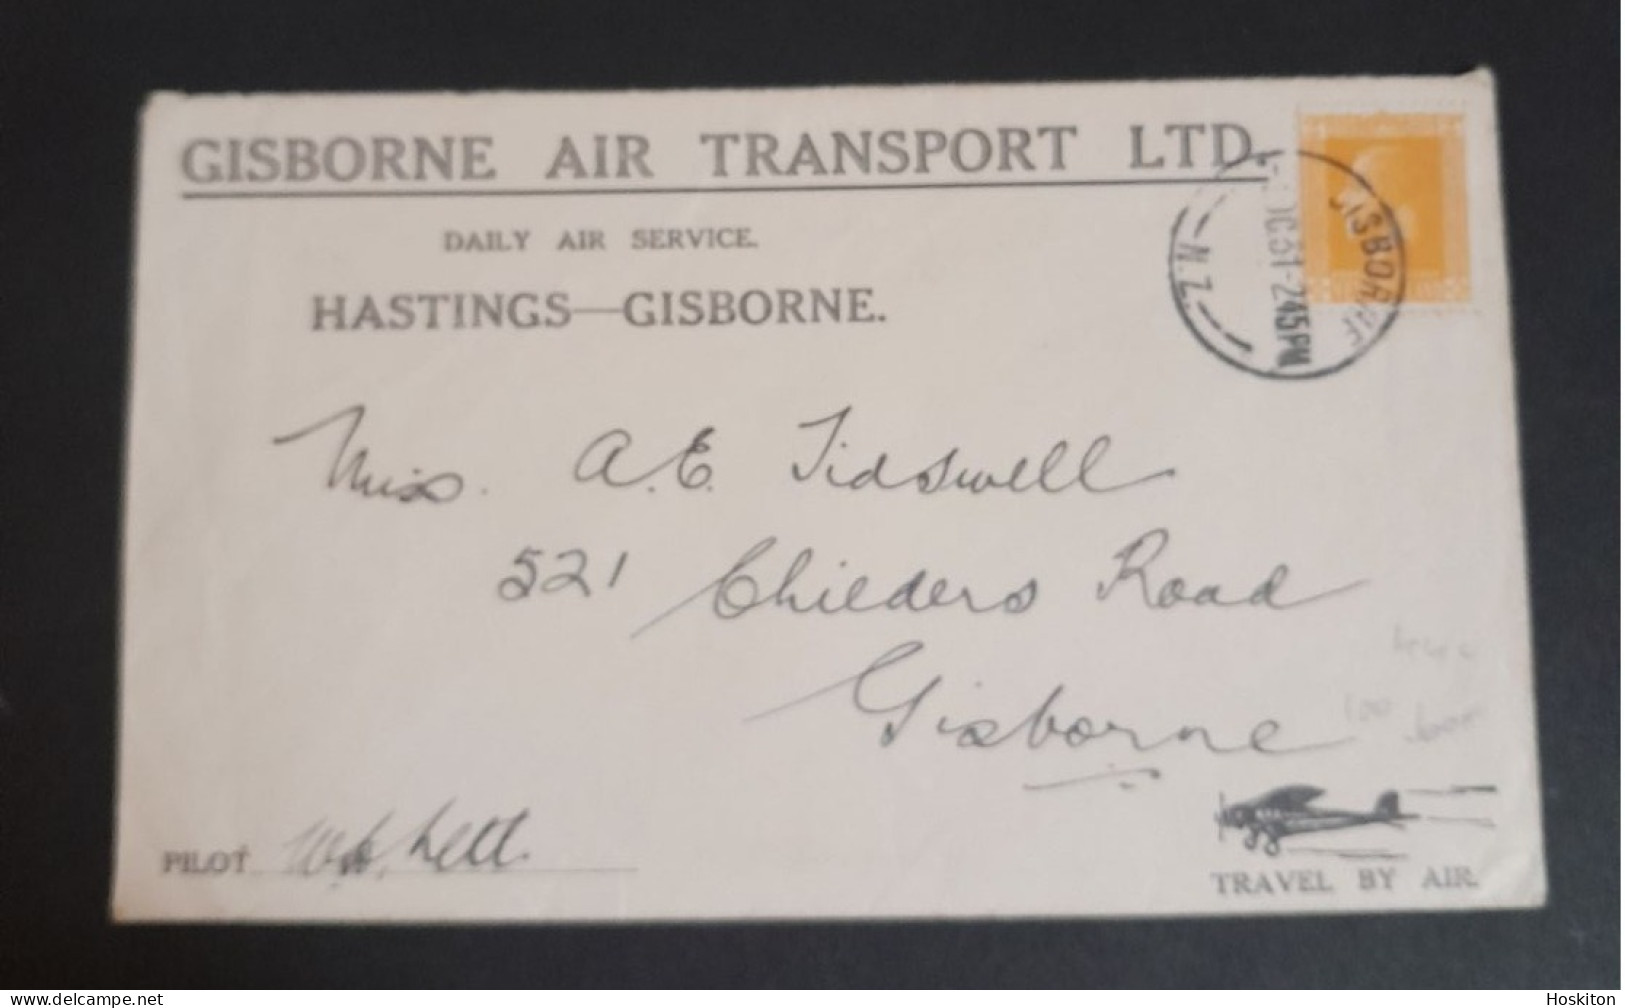 Cisborne Air Transport Ltd Hastings Gisborne Special Printed Cover. - Briefe U. Dokumente